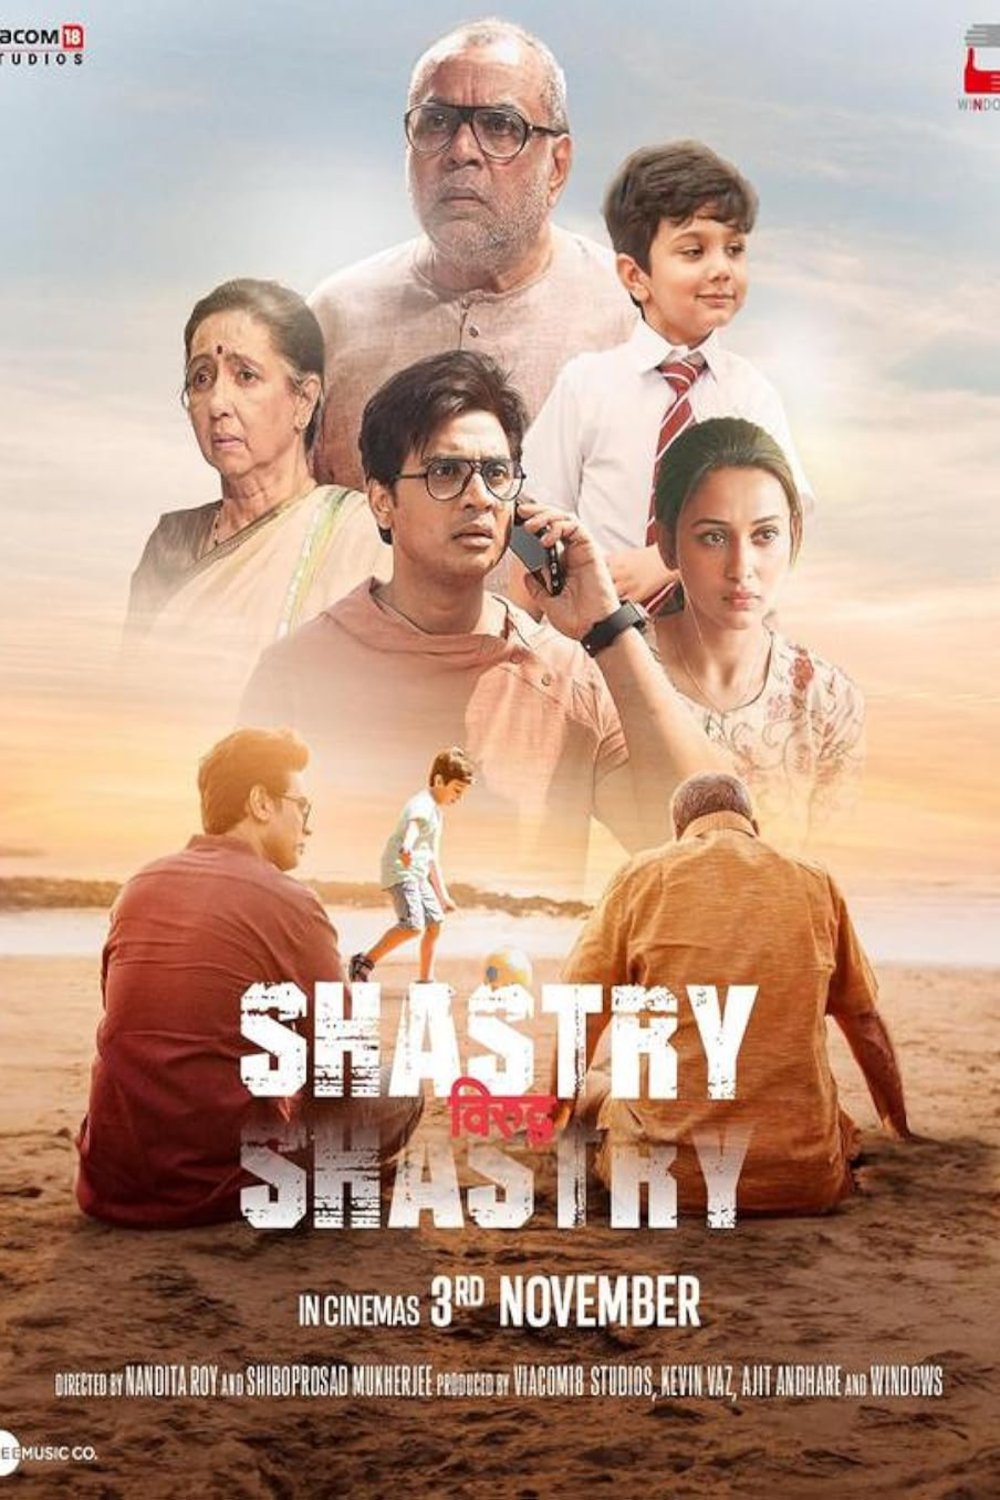 Hindi poster of the movie Shastry Viruddh Shastry